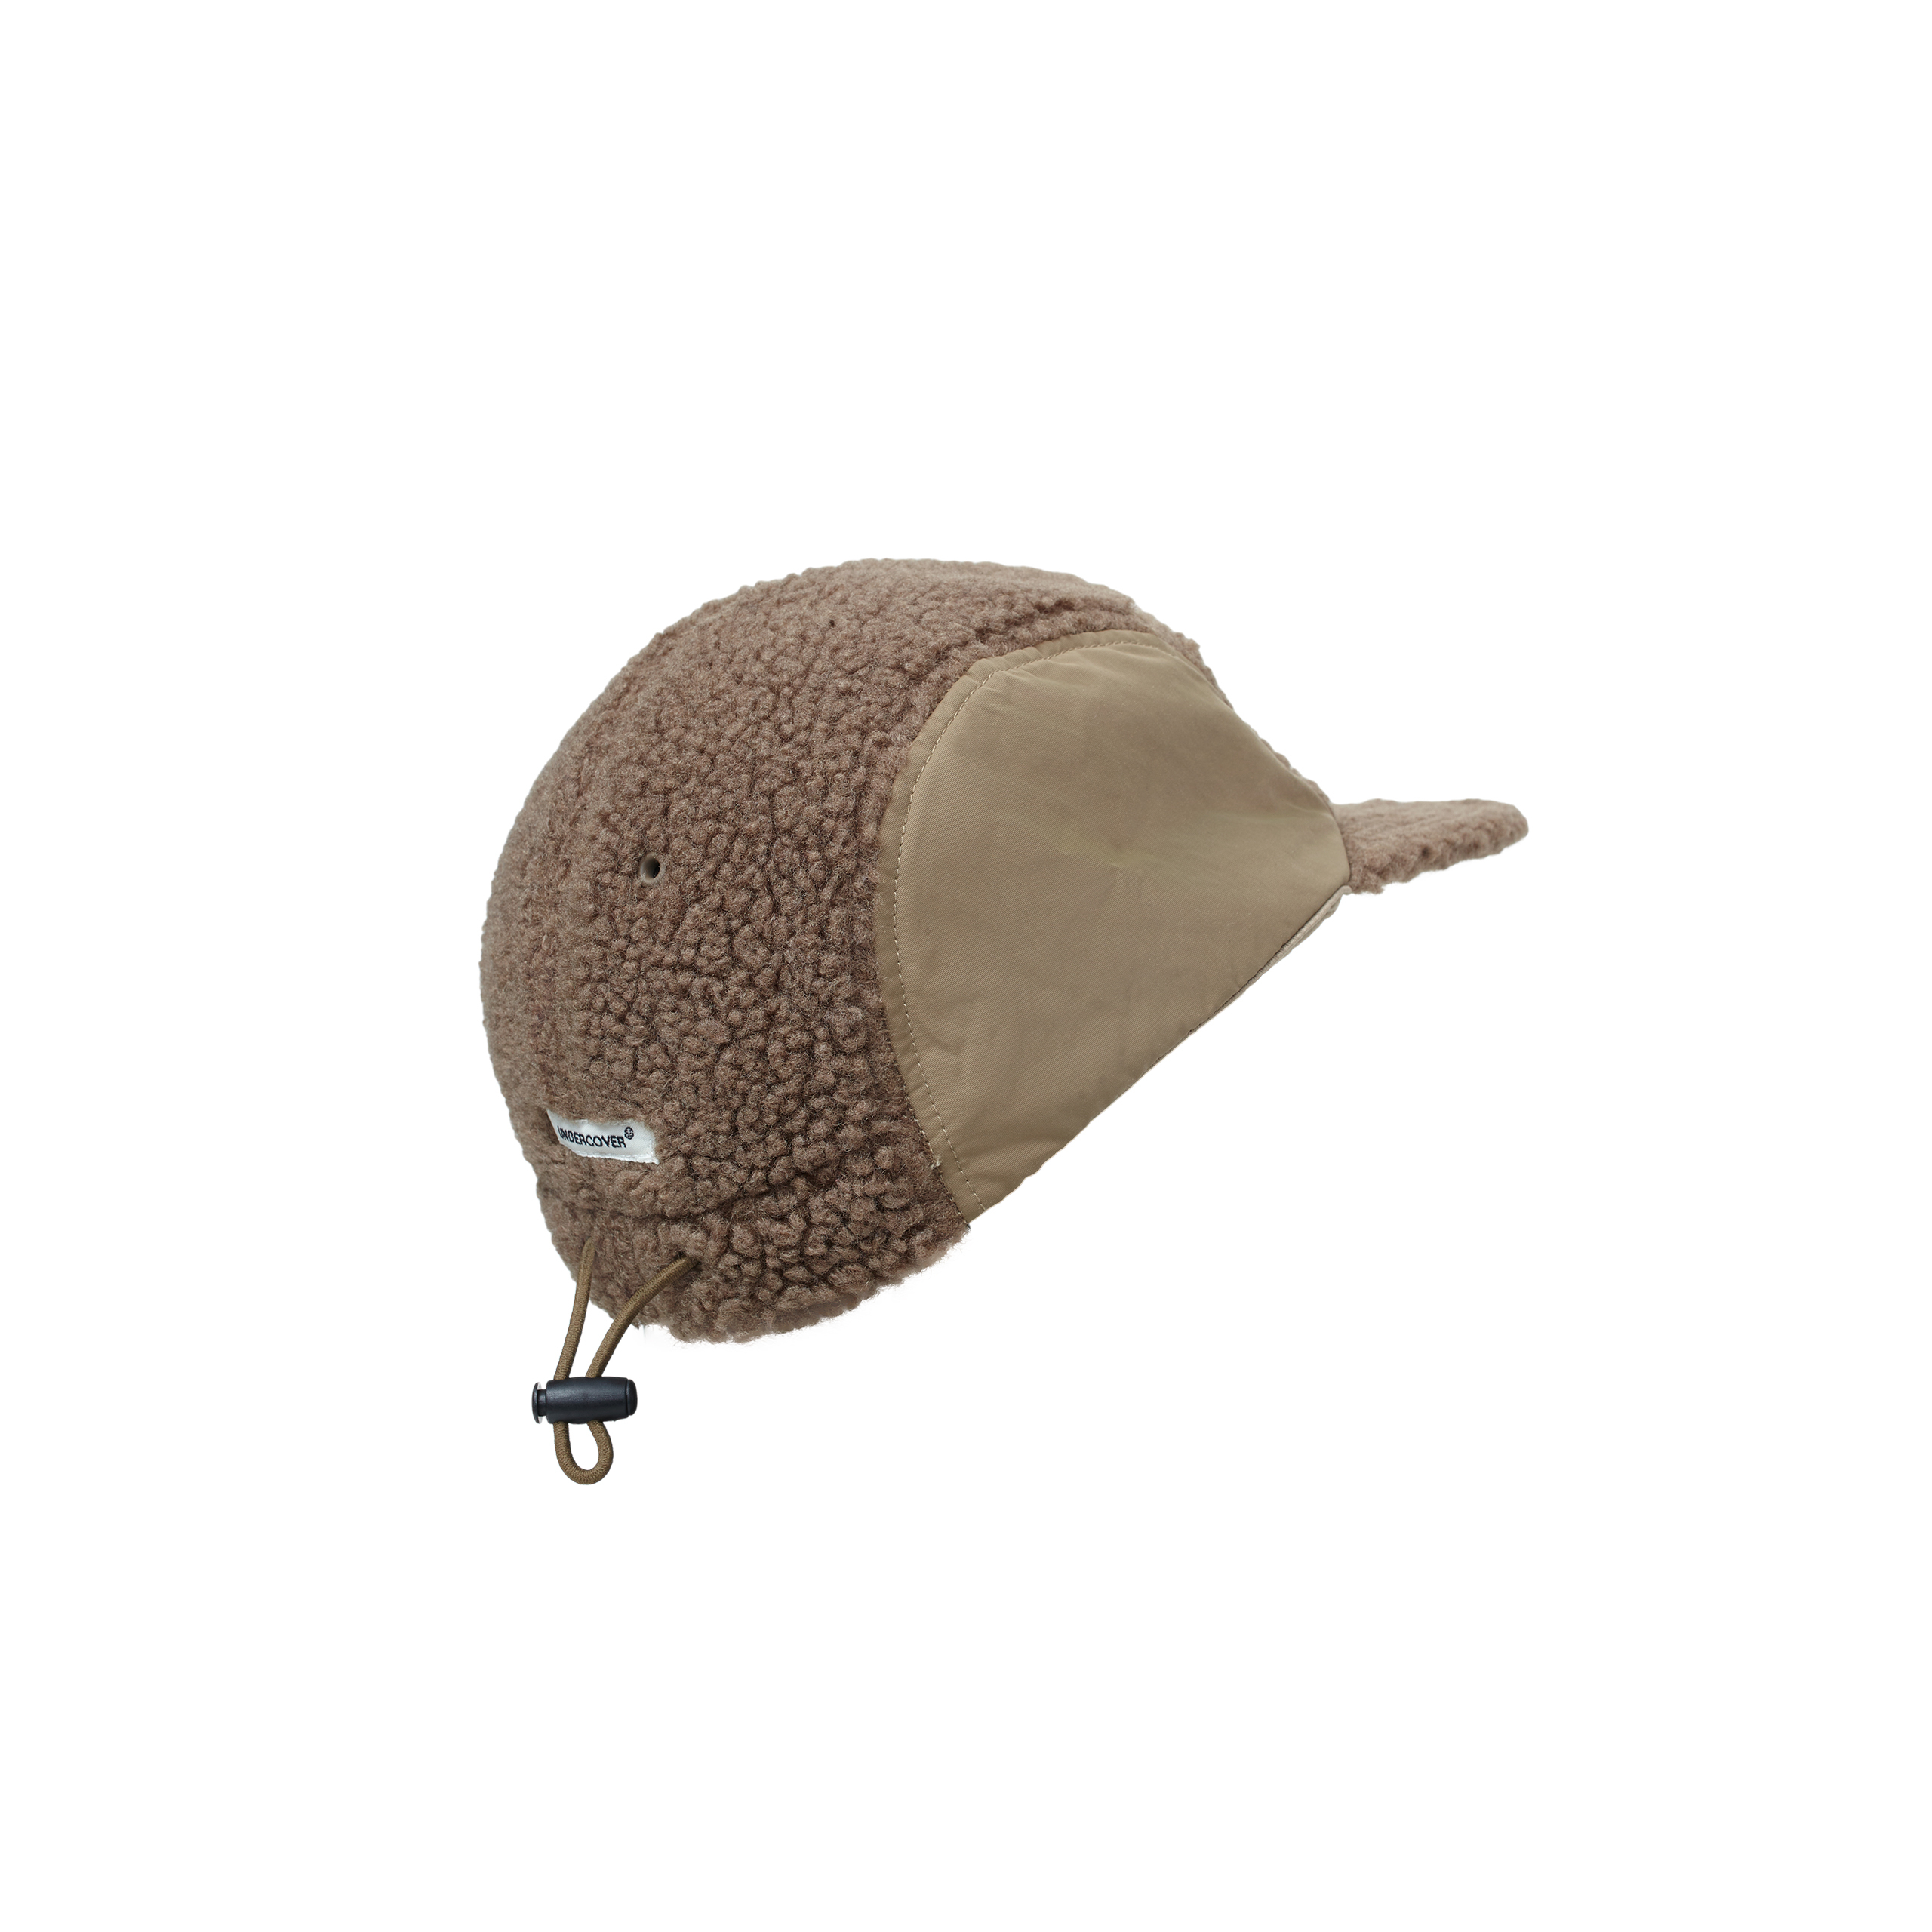 Комбинированная кепка с вышивкой Undercover UP2C4H01/BEIGE, размер One Size UP2C4H01/BEIGE - фото 5